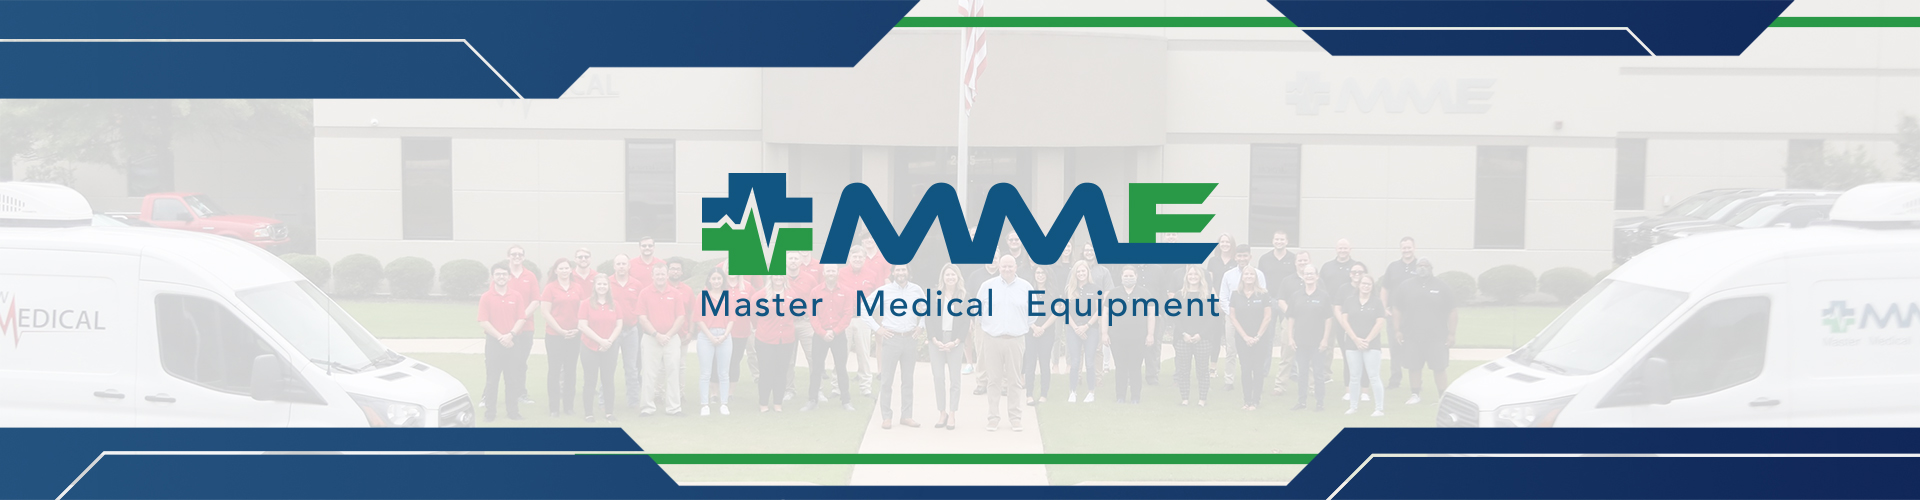 Master Medical Equipment banner